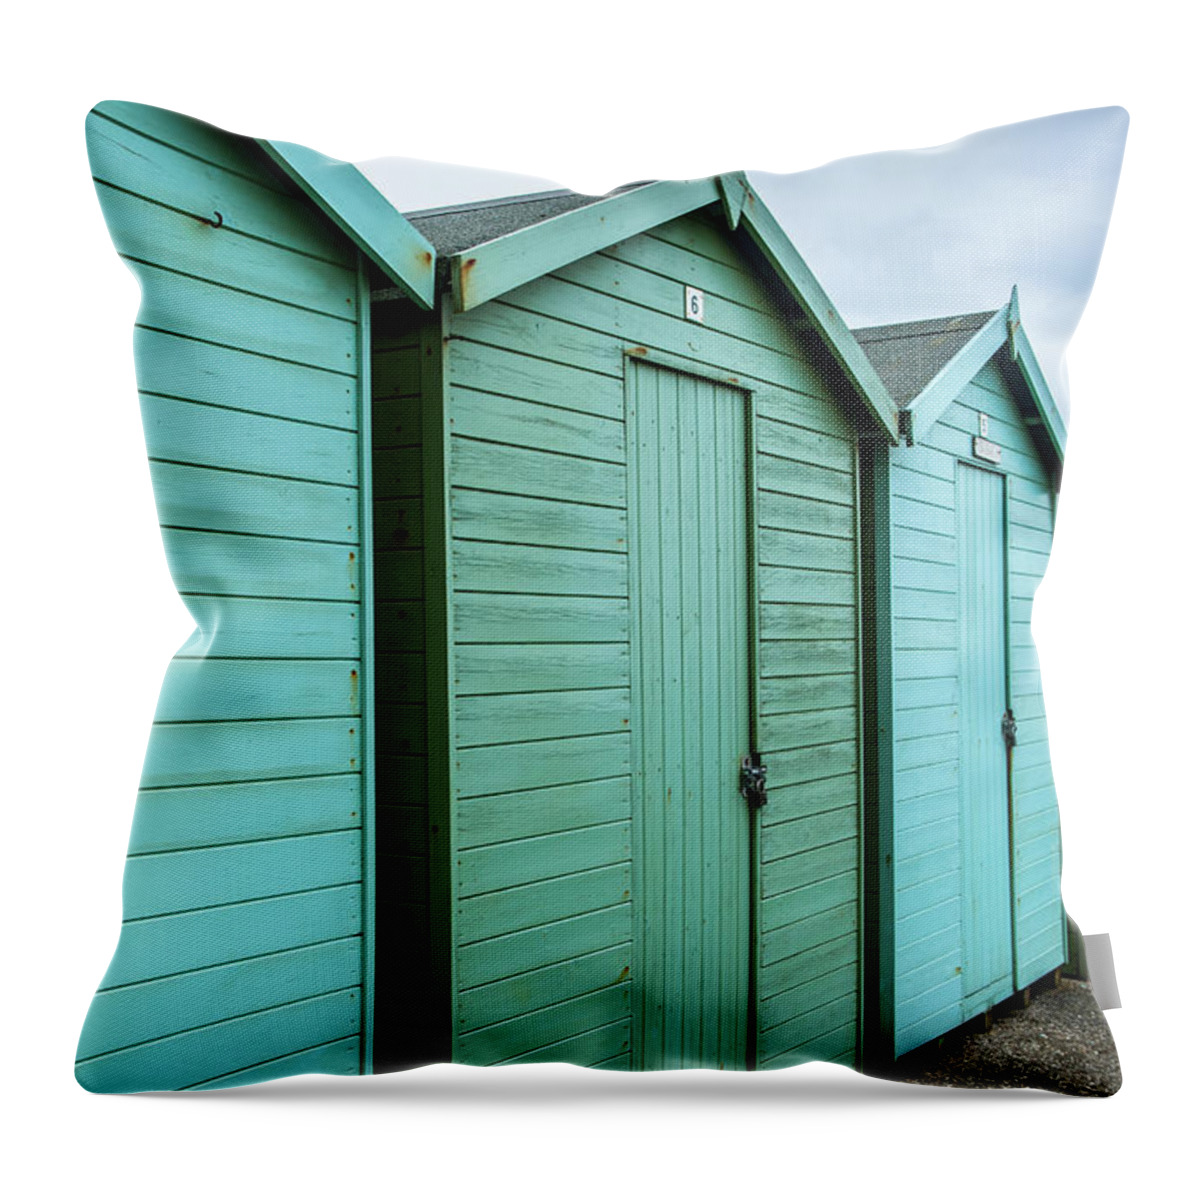 Beach Huts Throw Pillow featuring the photograph Winter Beach Huts iii by Helen Jackson